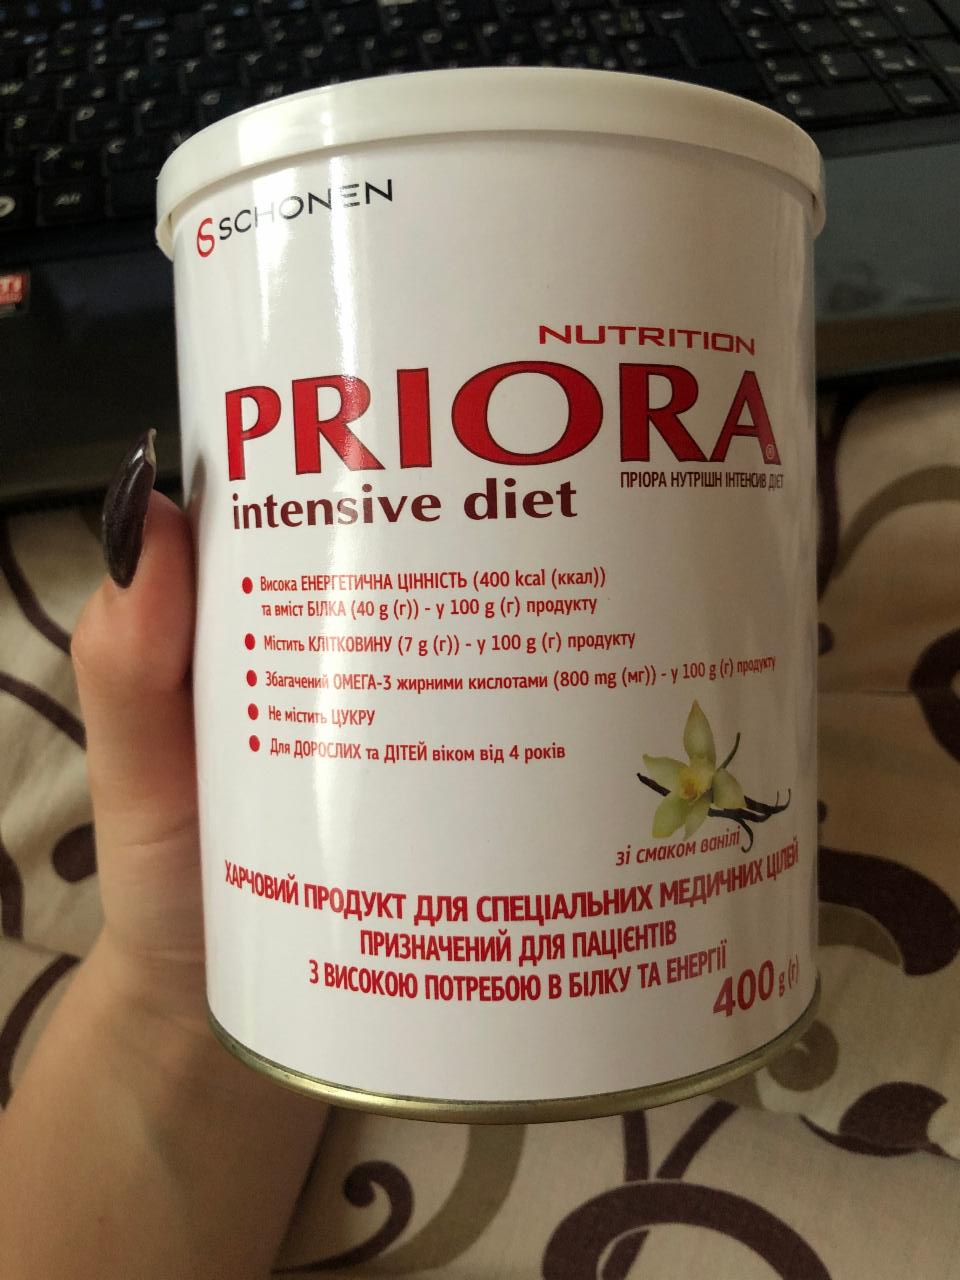 Фото - Priora intensive diet Nutrition зі смаком ванілі